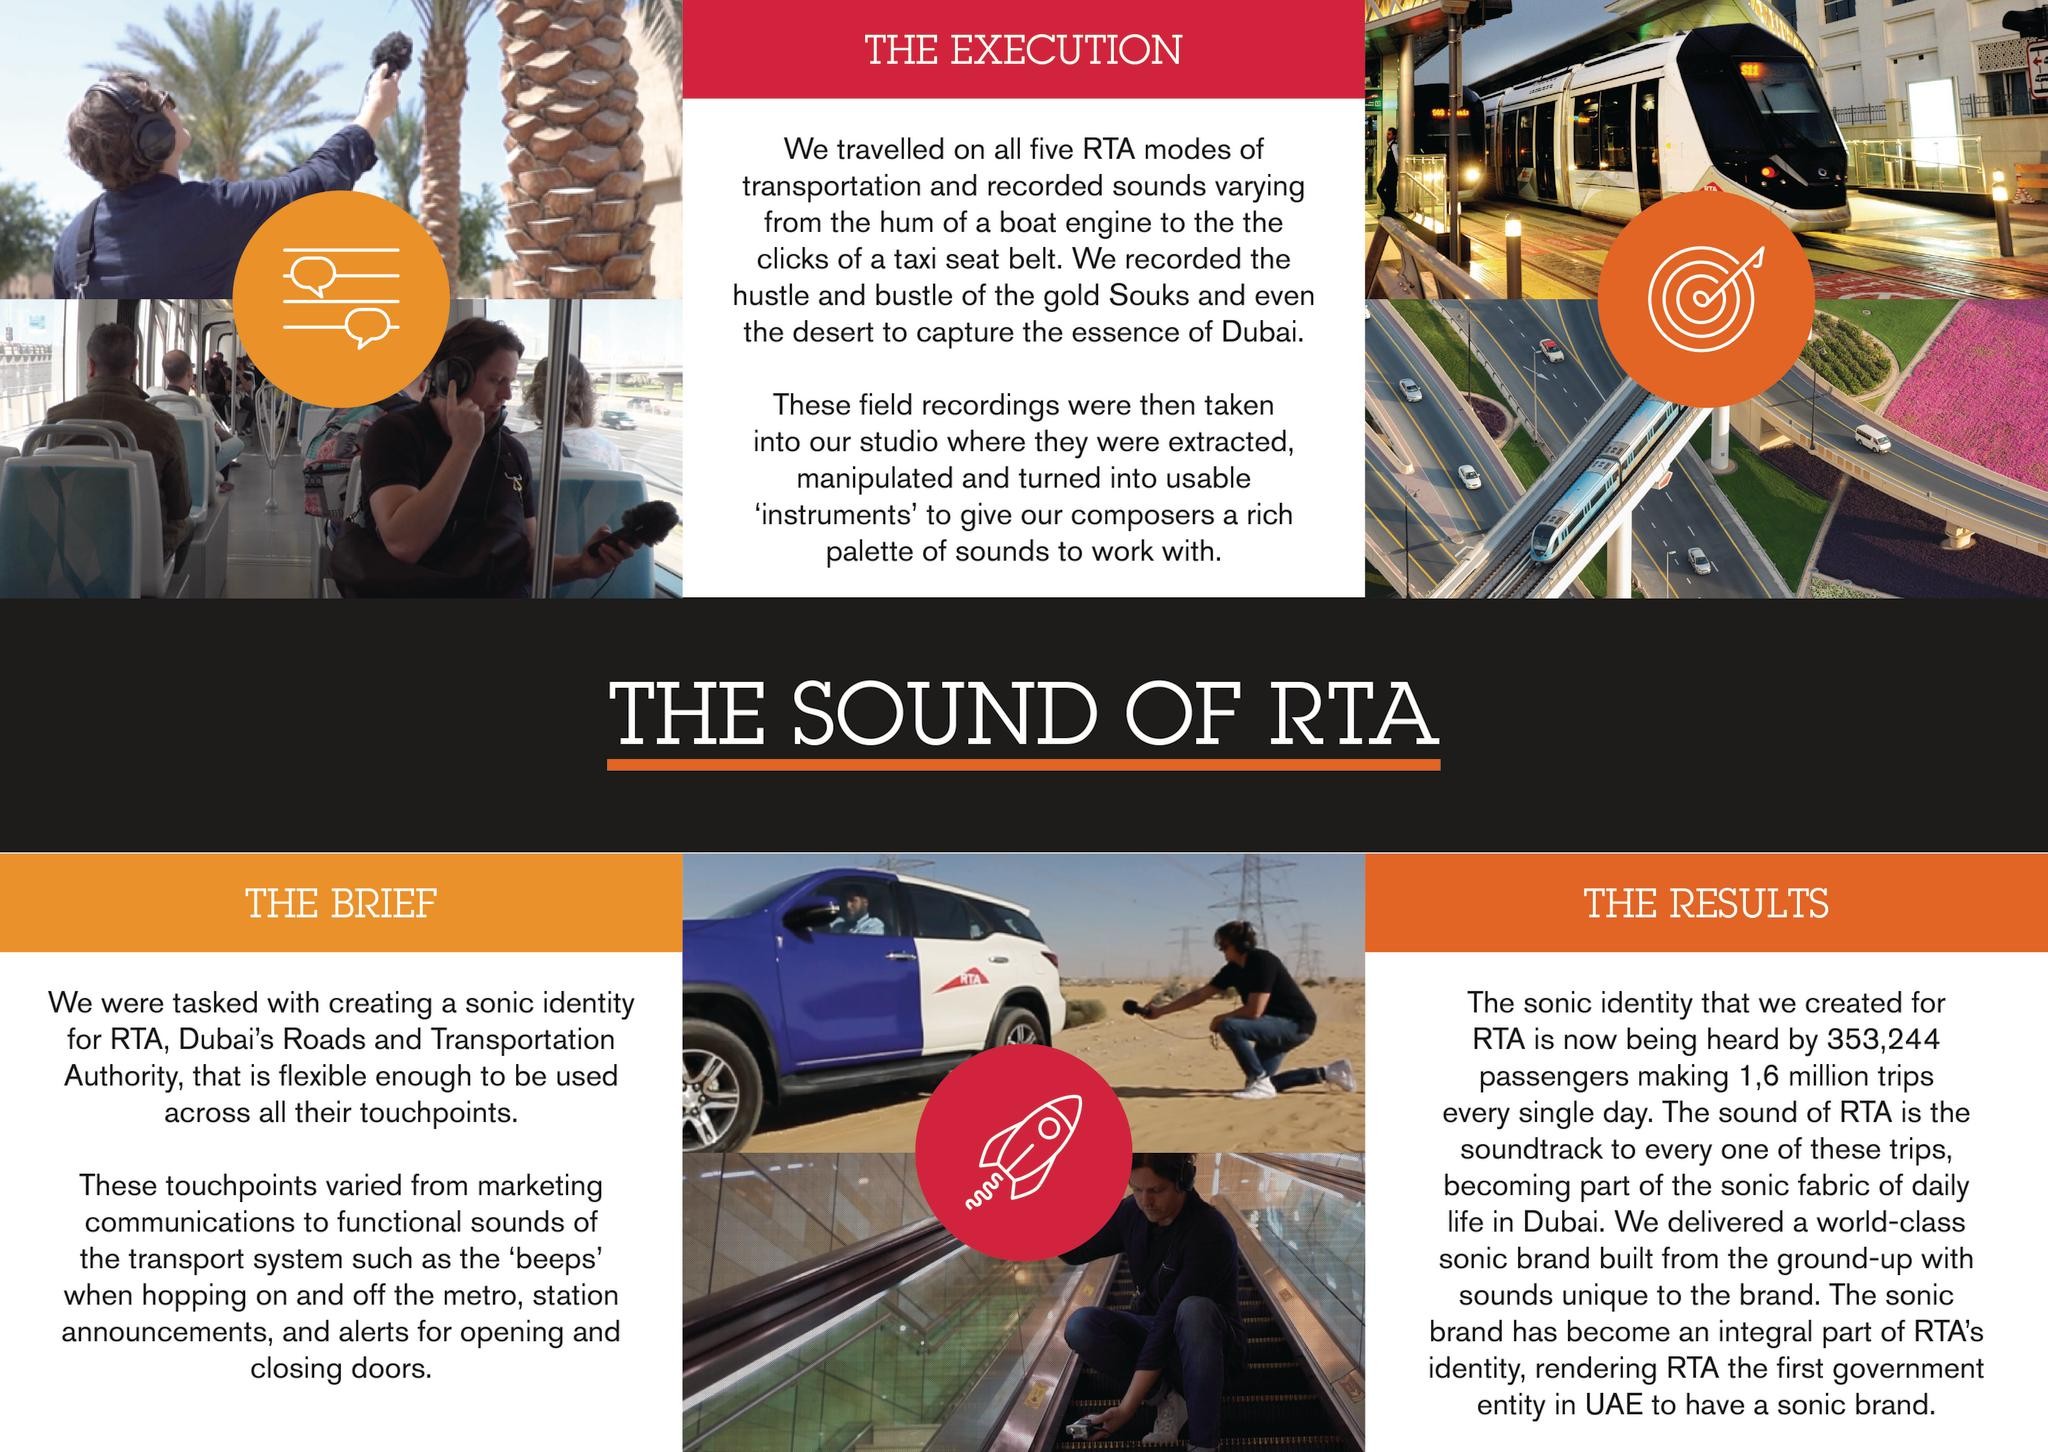 The Sound of RTA